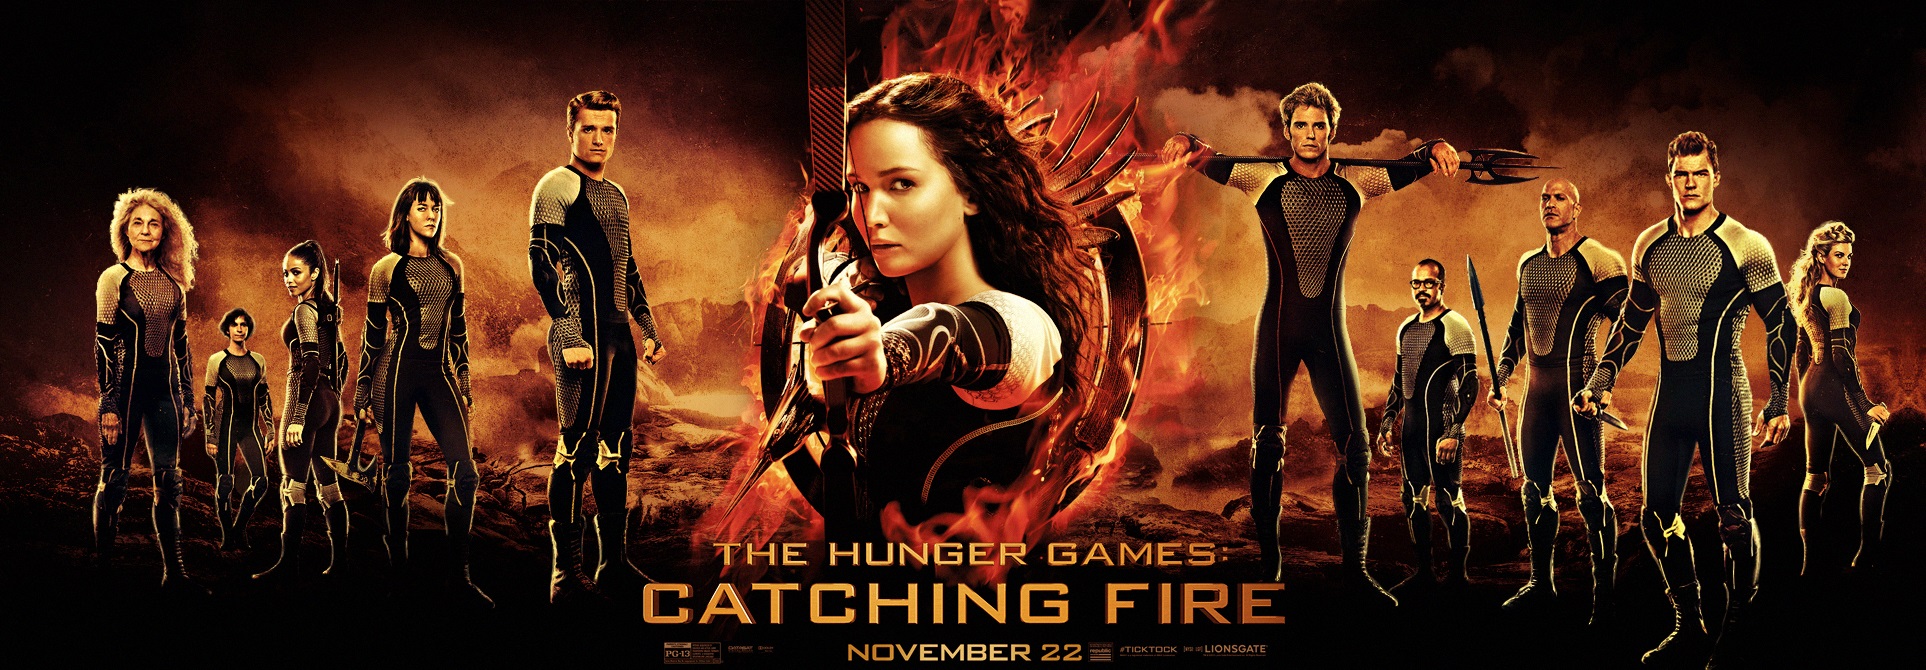 Watch The Hunger Games Mockingjay Part 1 Online - Watch ...